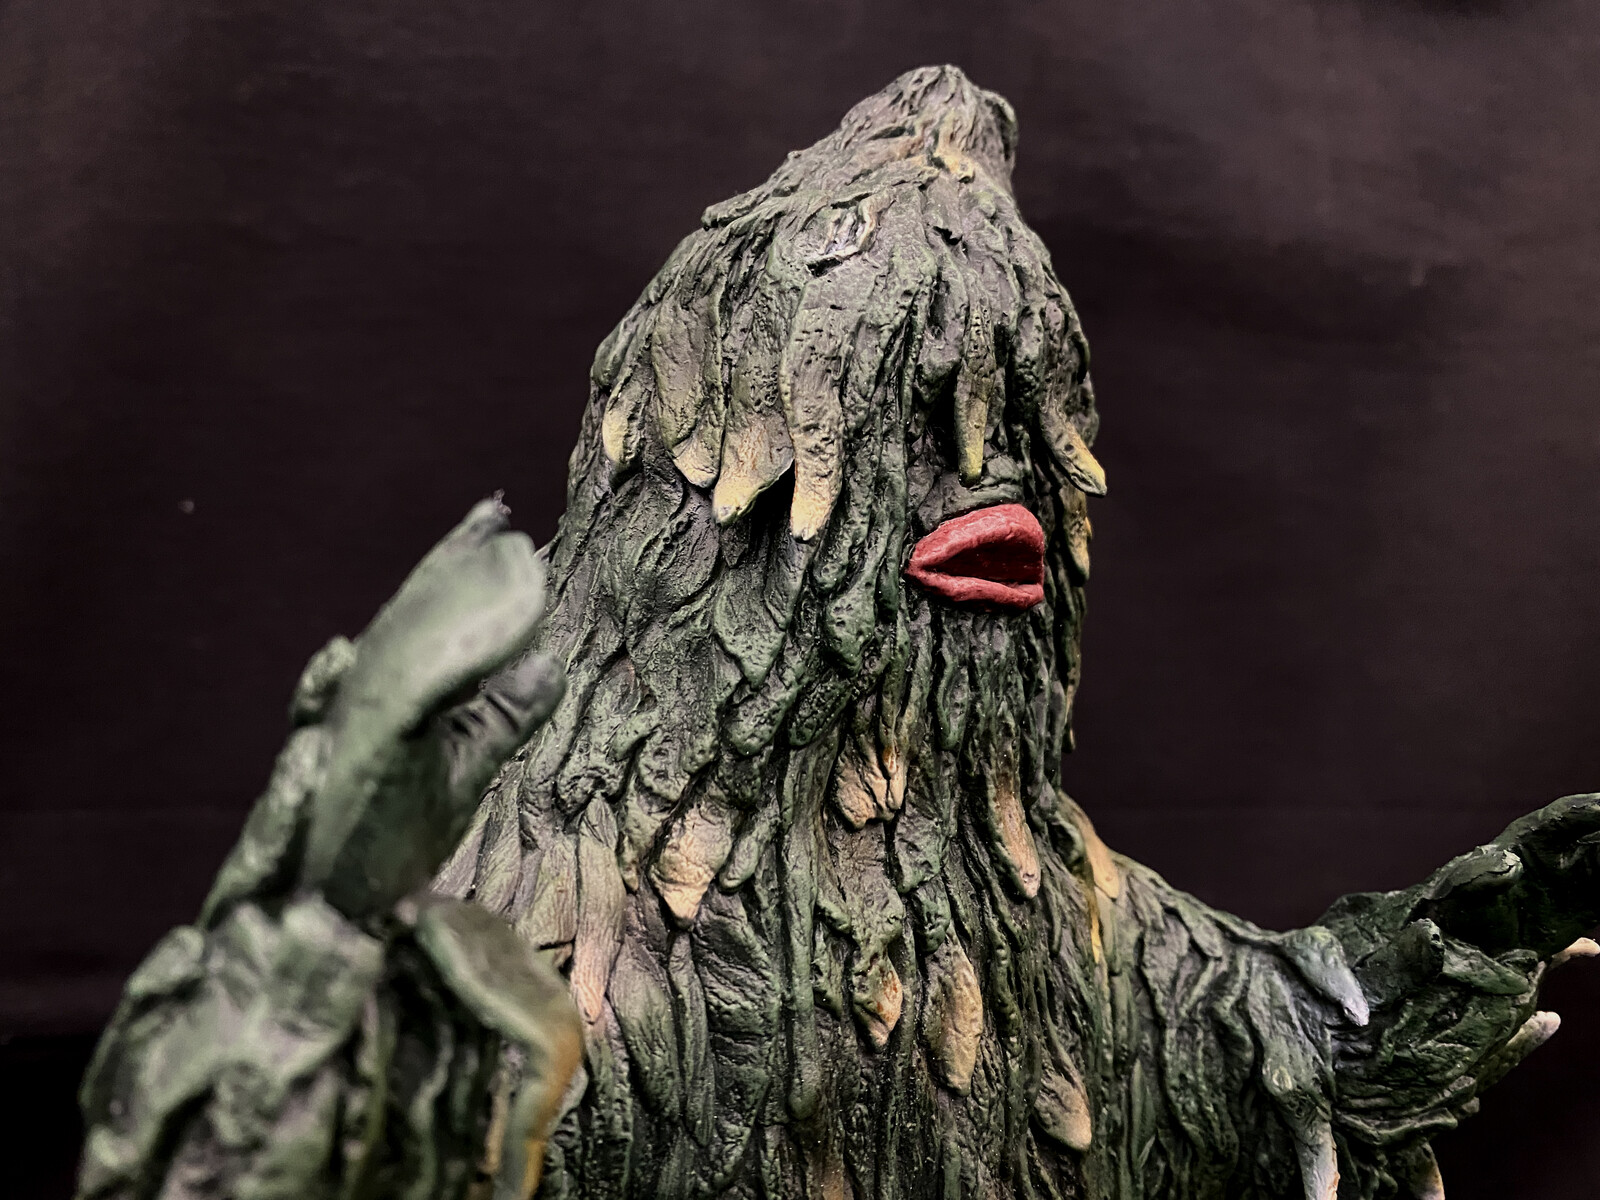 Sludge Monster Zazahn Art Statue ヘドロ怪獣ザザーン
https://www.solidart.club/ 